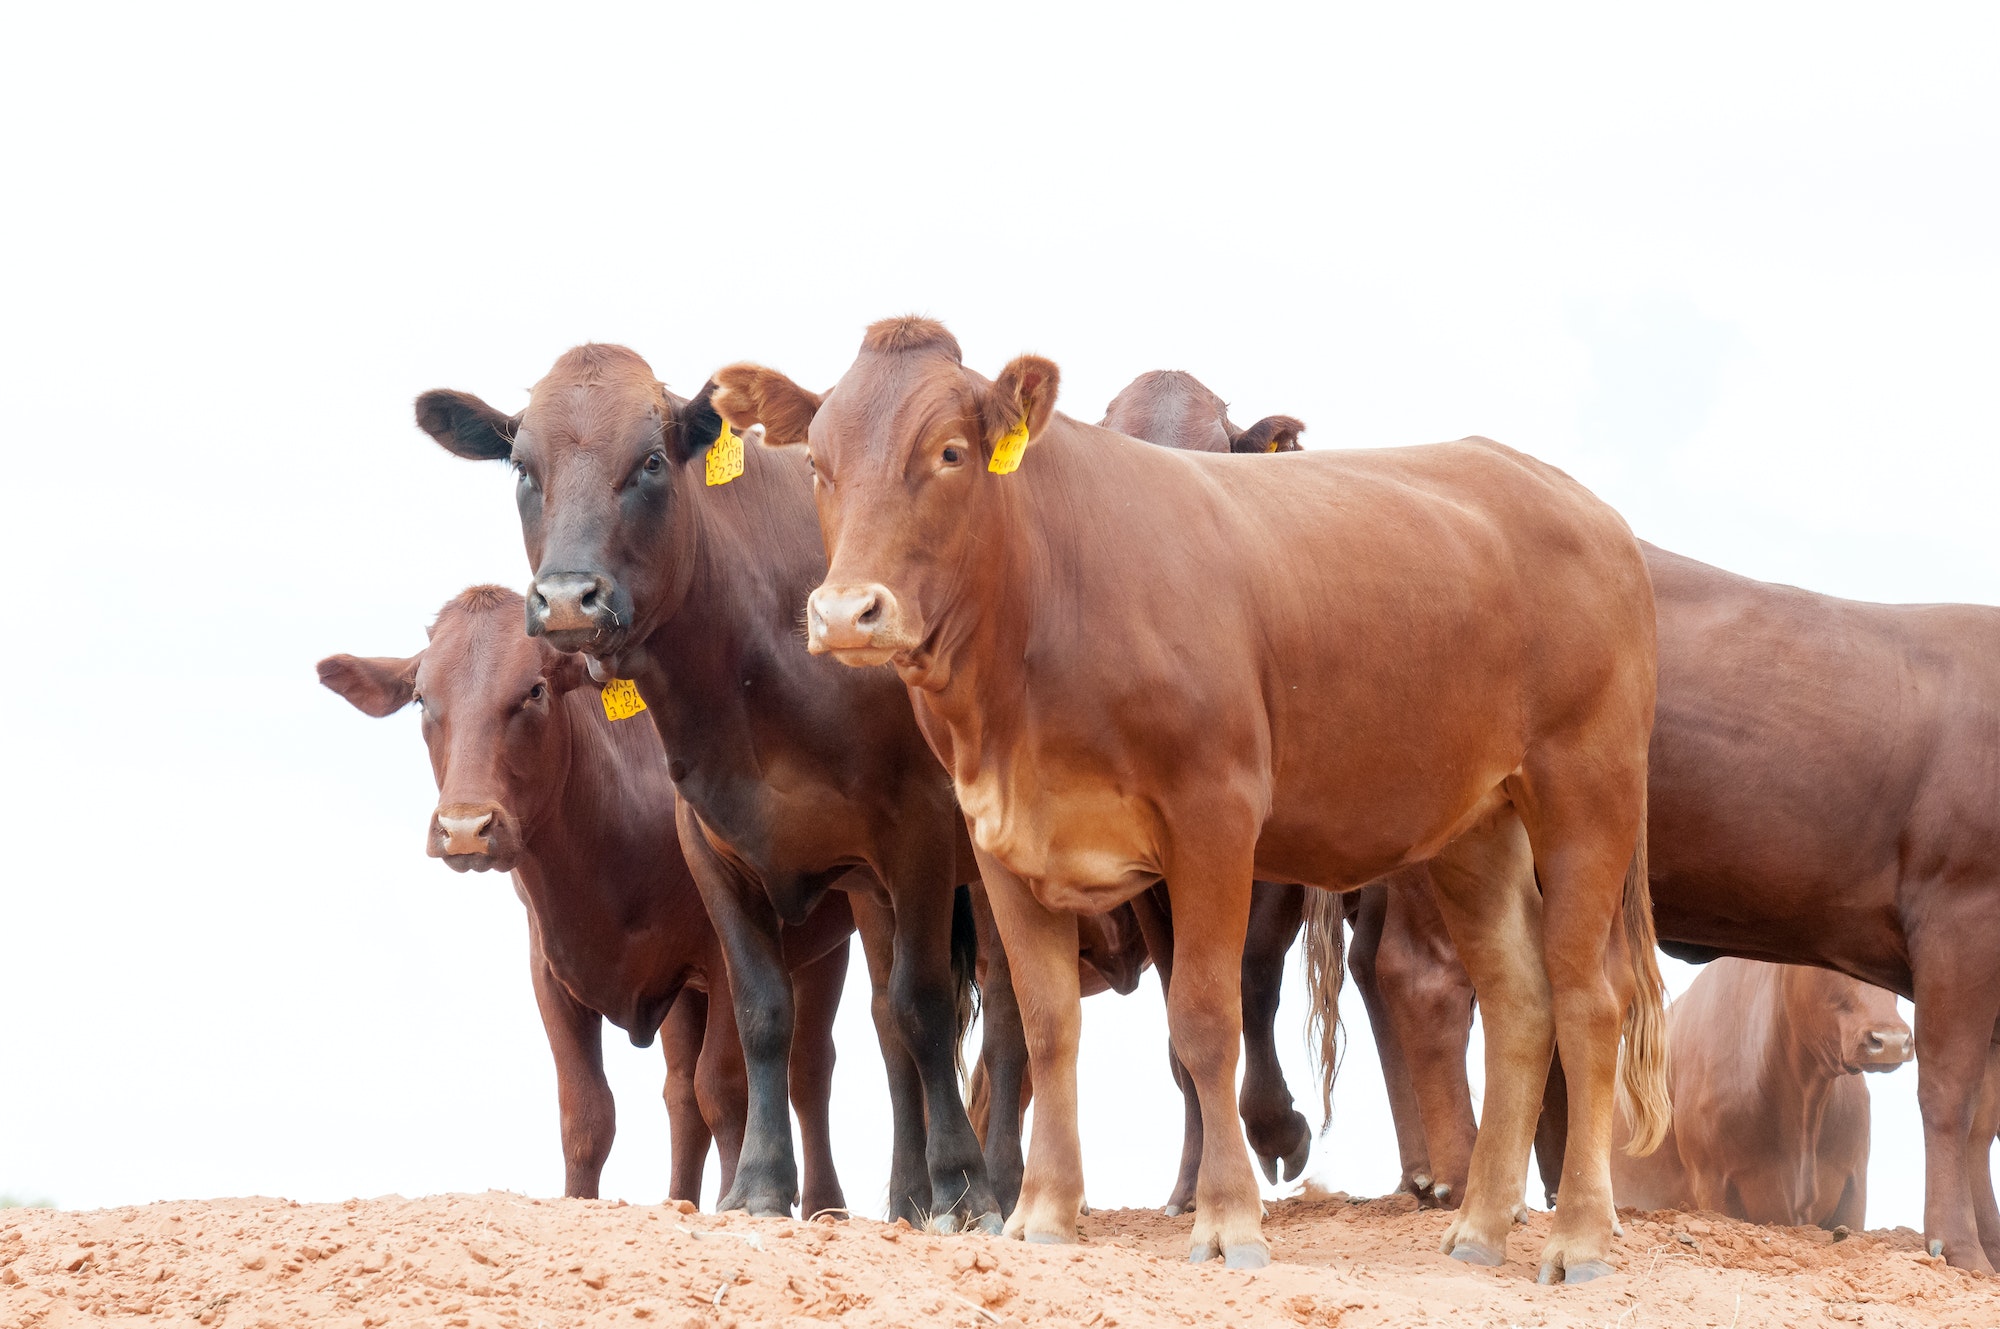 Afrikaner cattle in the Kalahari